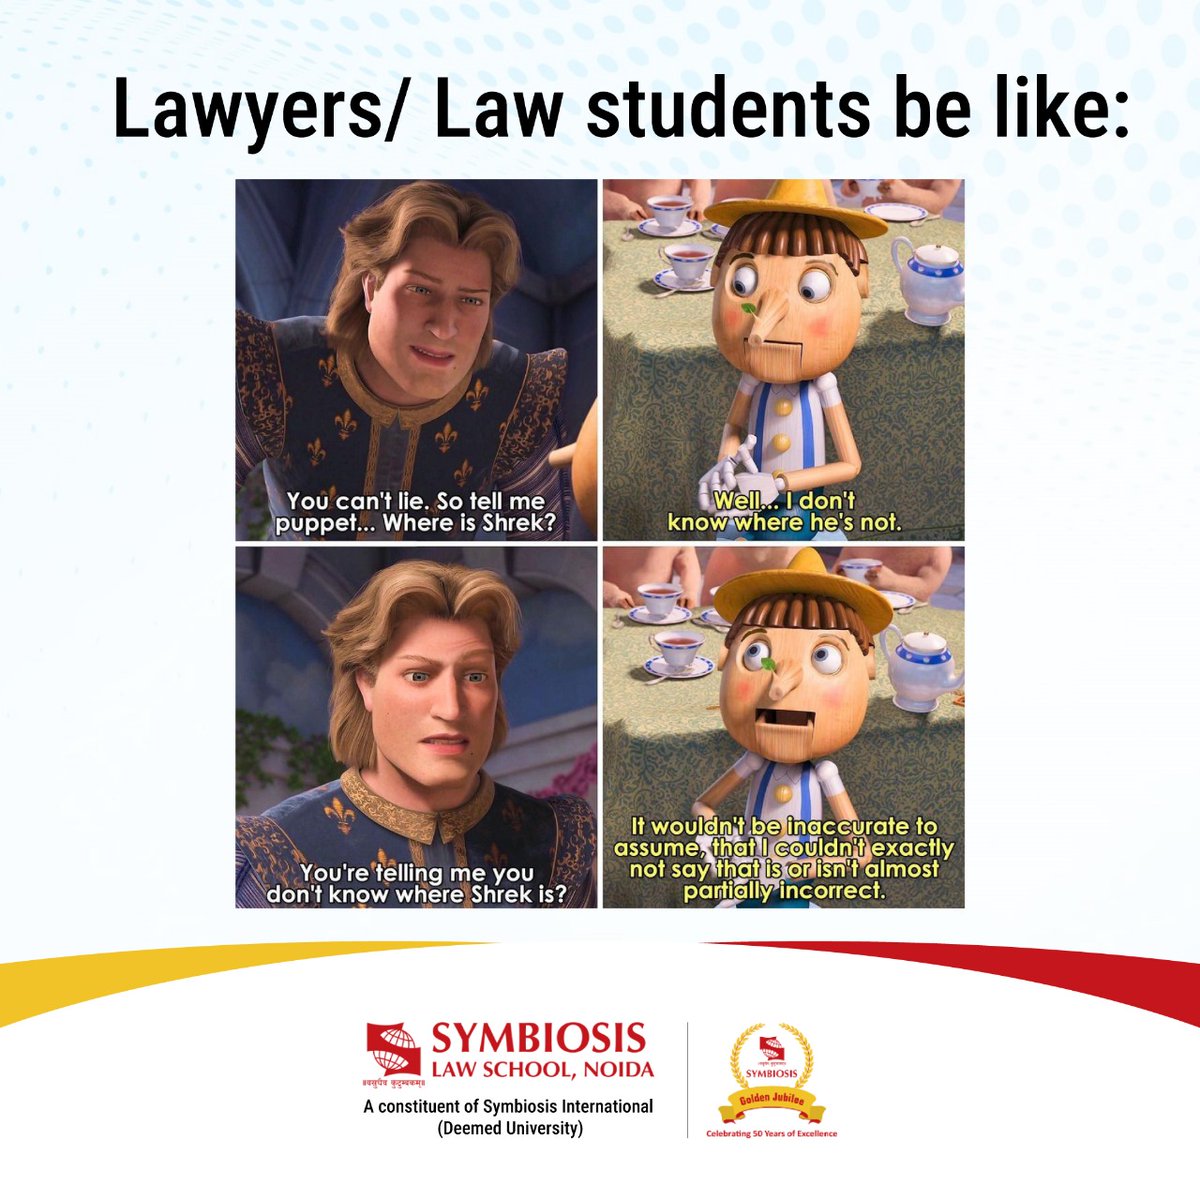 True or not?😂
.
.
.
#sls #symbiosis #symbiosislawschool #noida #relatable #meme #funnymeme #lawstudents #lawyerlife #LawSchoolLife